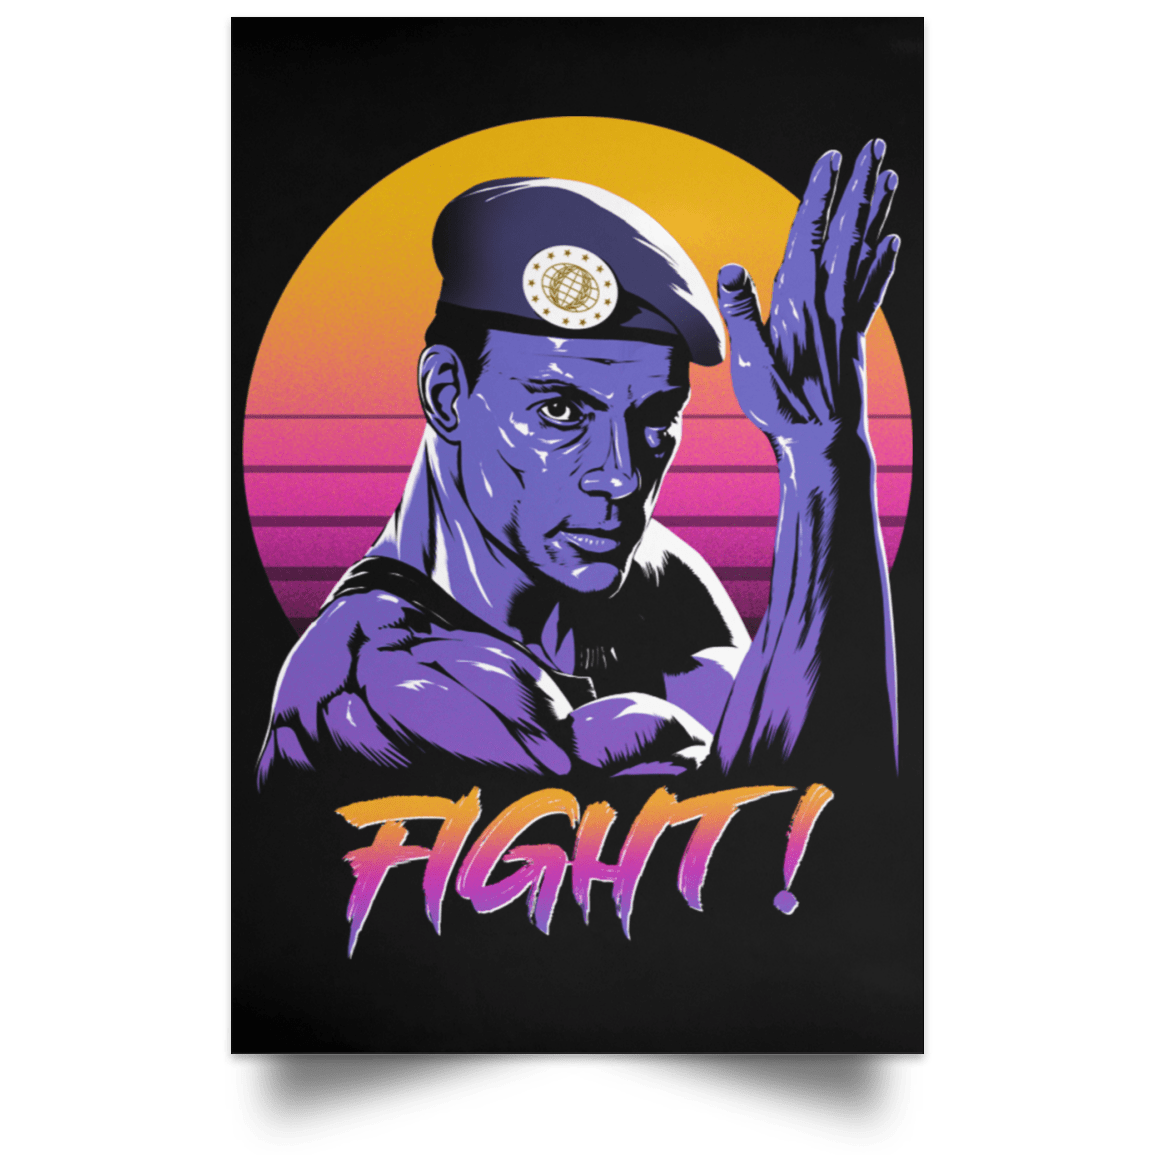 Fight! Portrait Poster